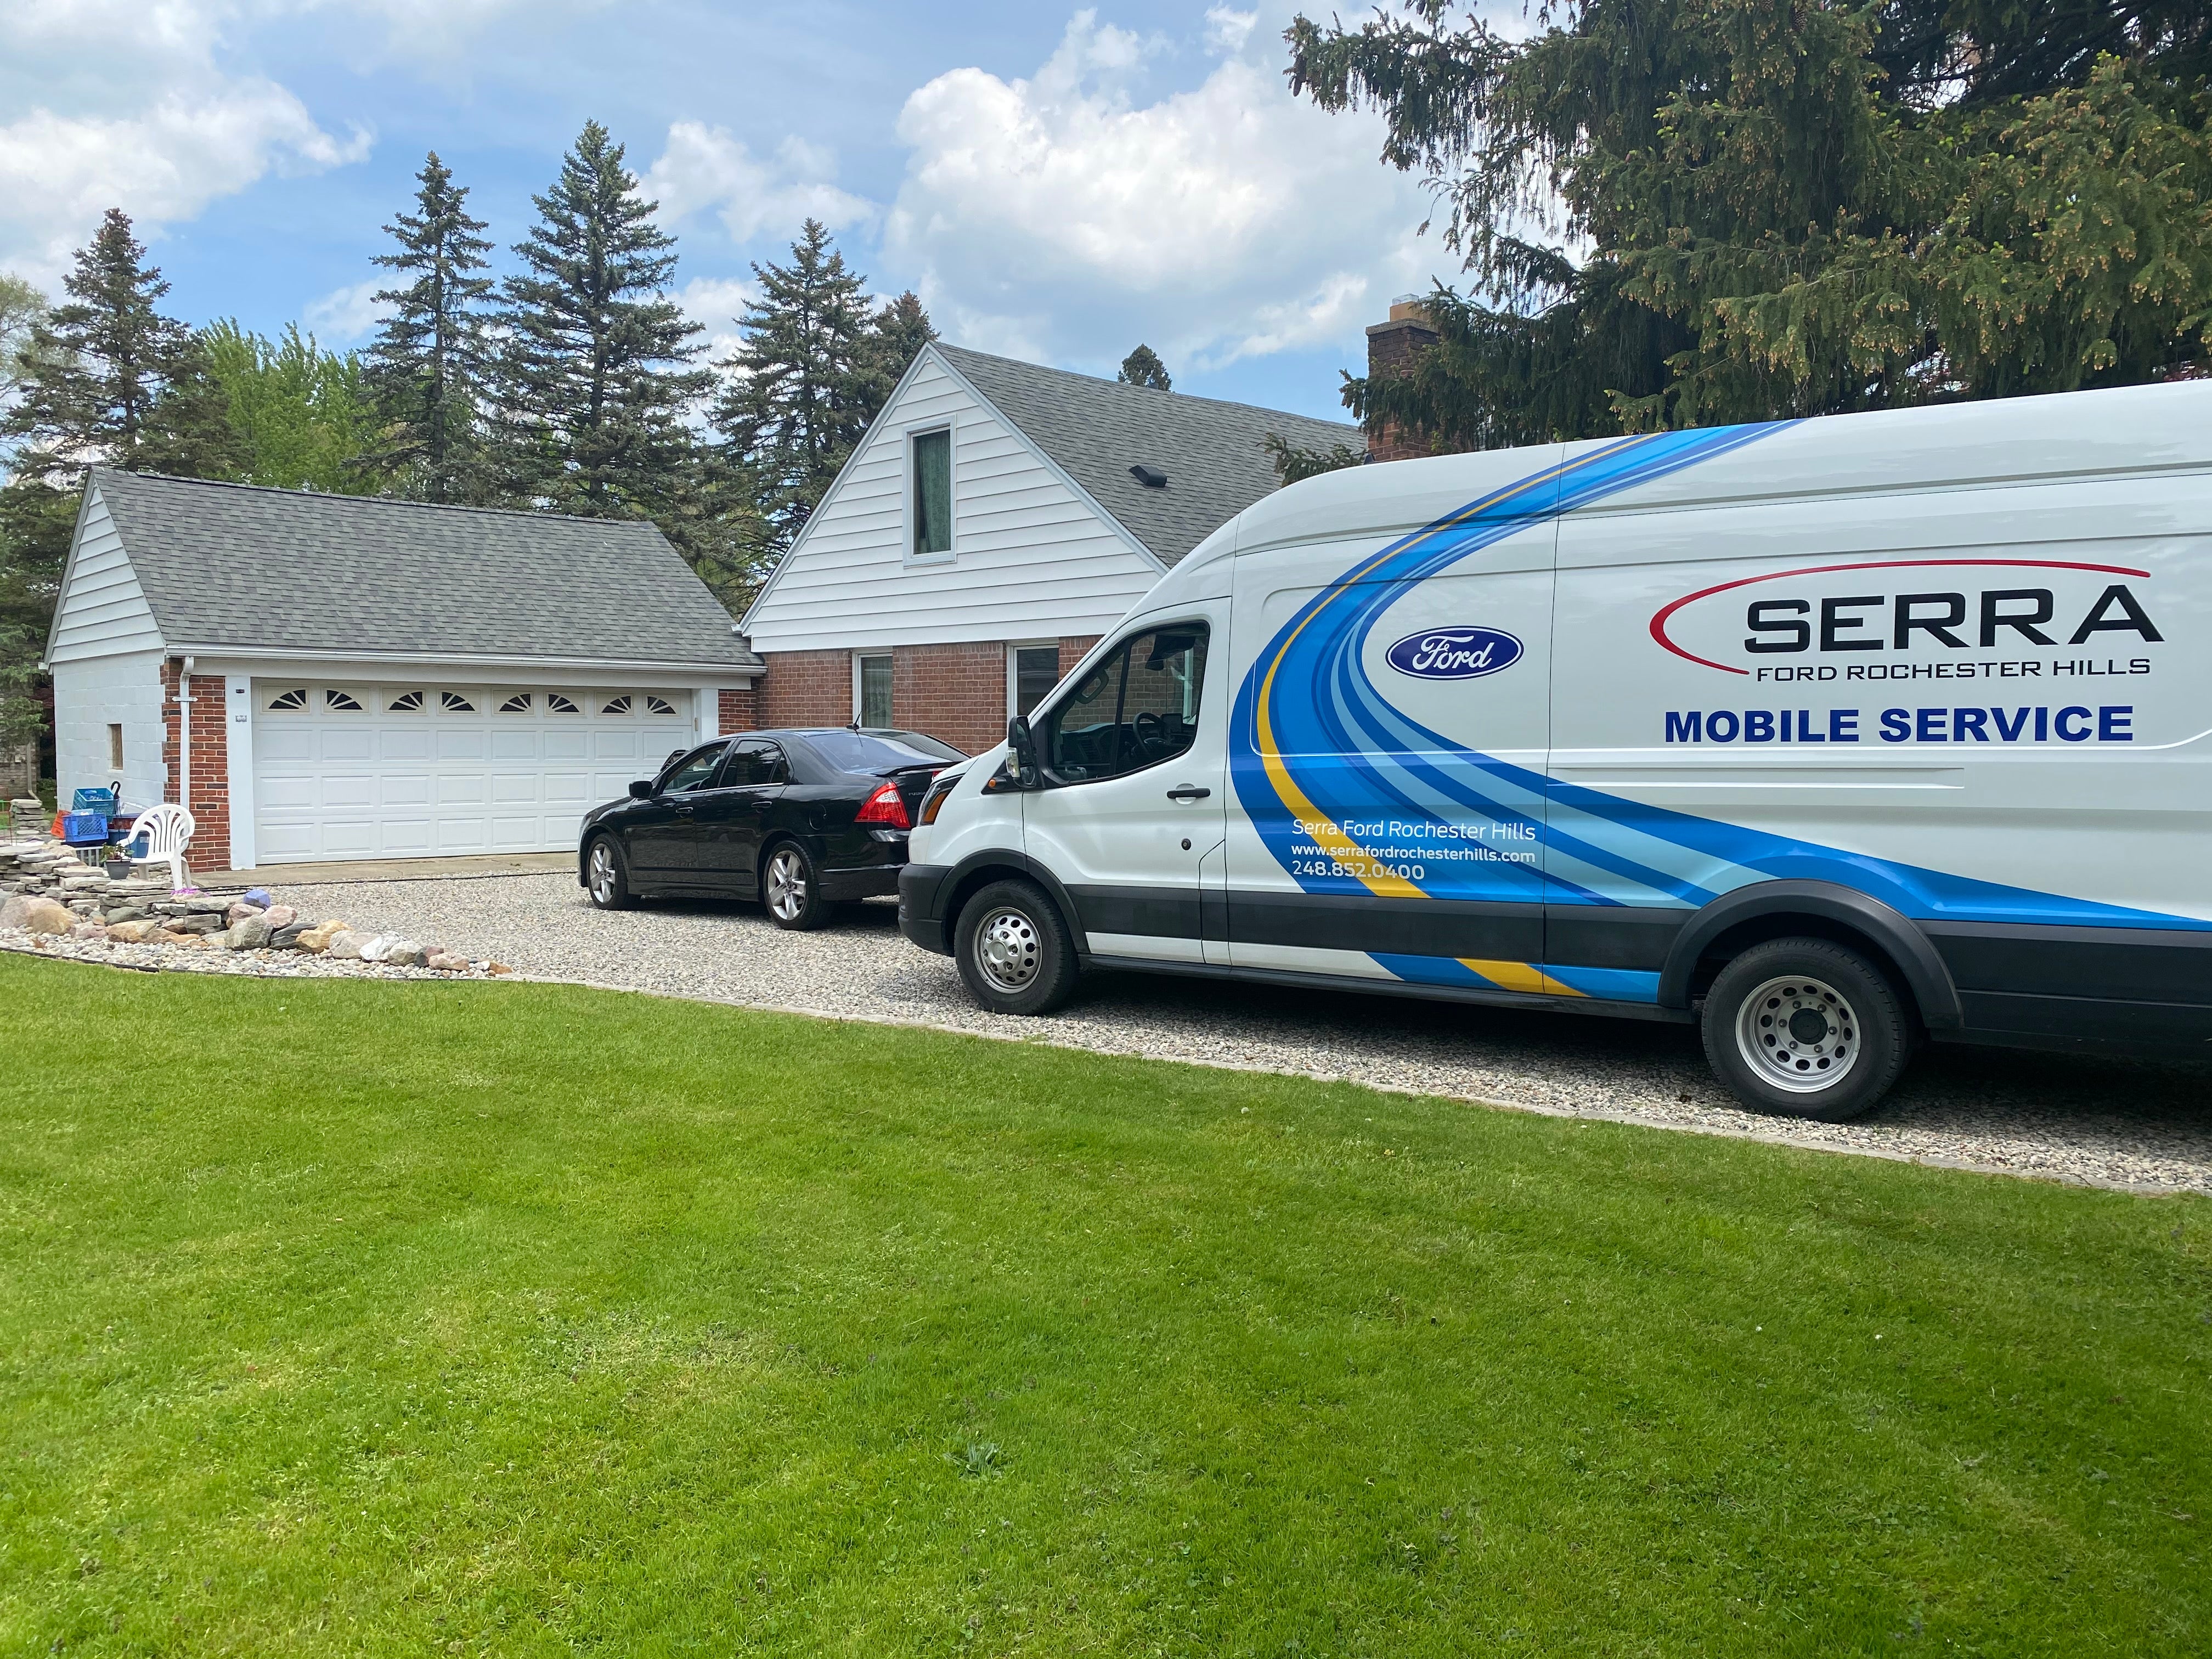 Mobile Service Van | Serra Ford Rochester Hills in Rochester Hills MI